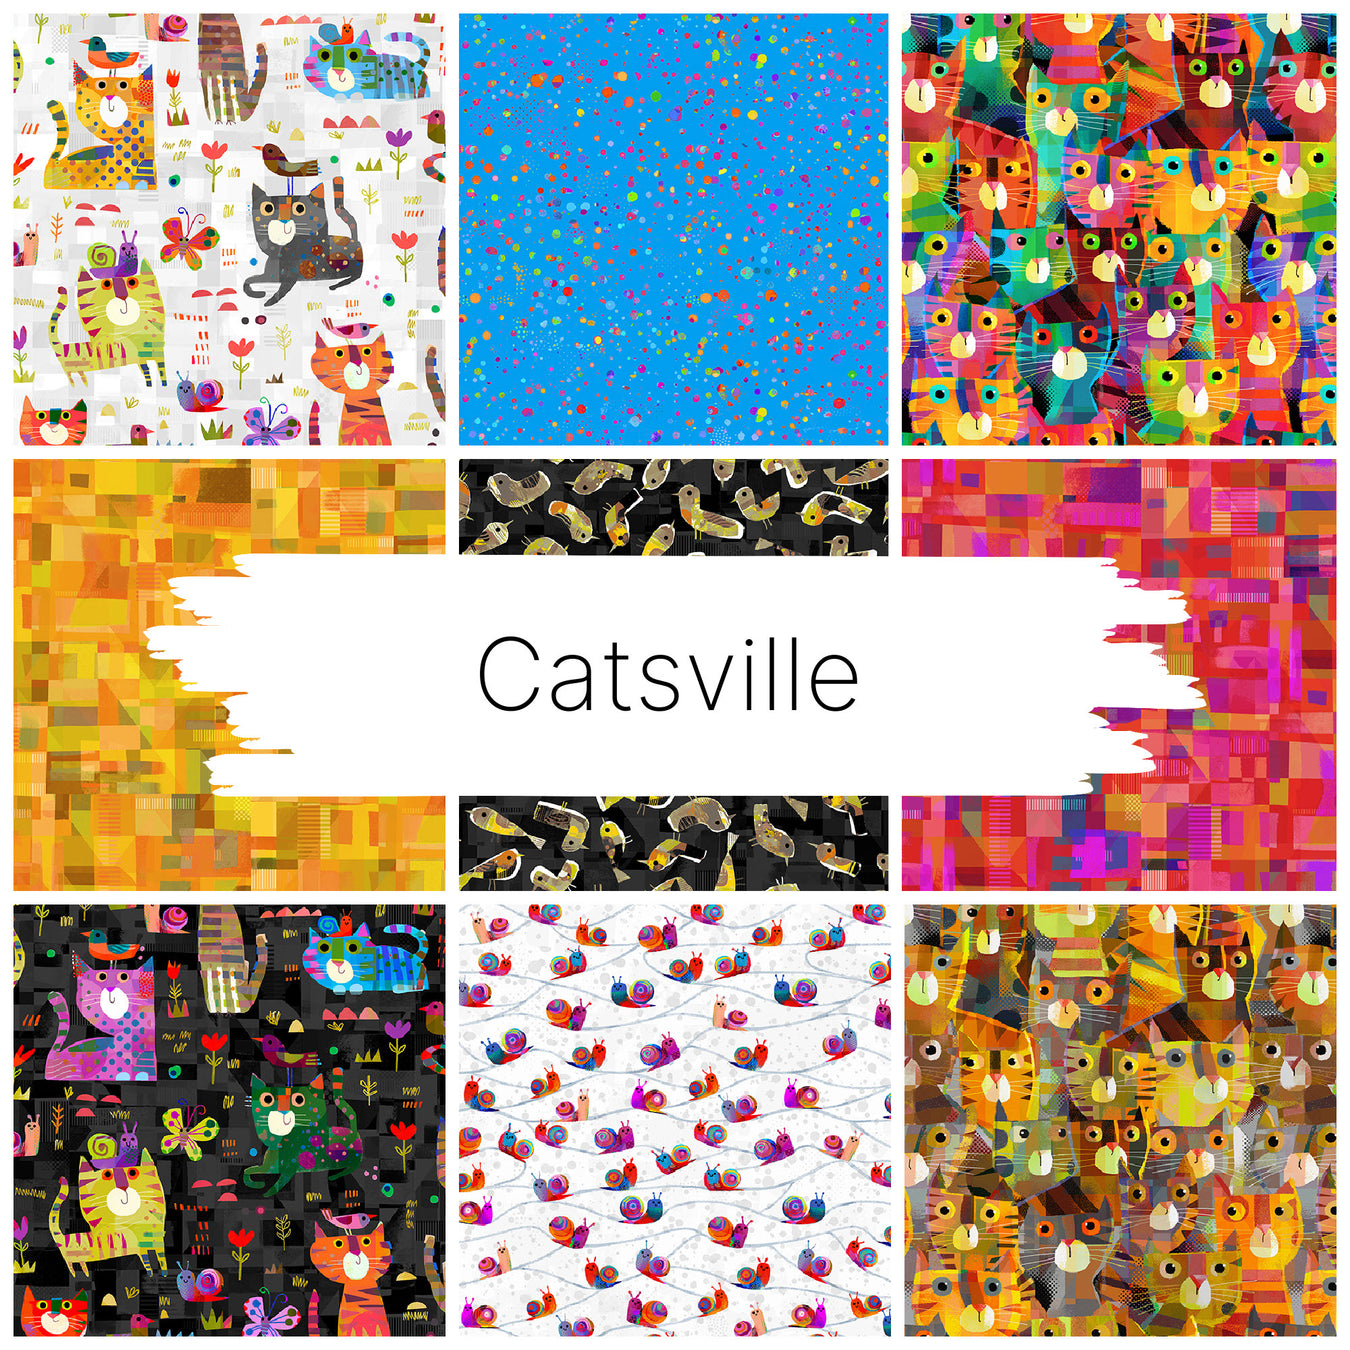 Catsville